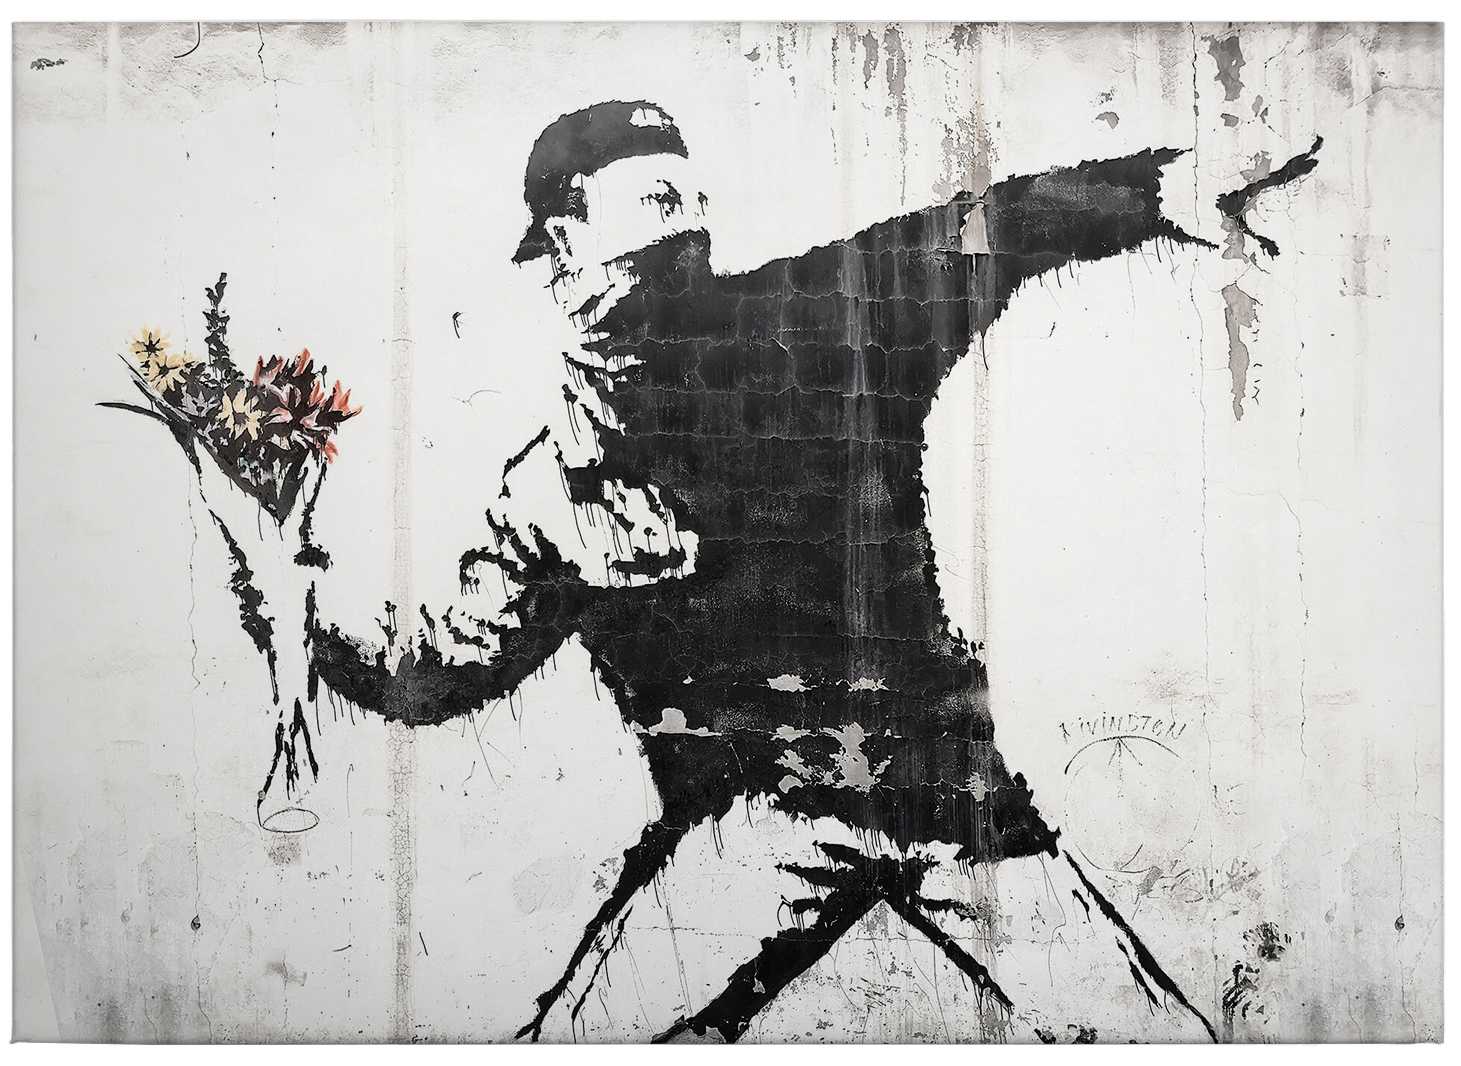             Banksy canvas print "Flower Thrower" graffiti style
        